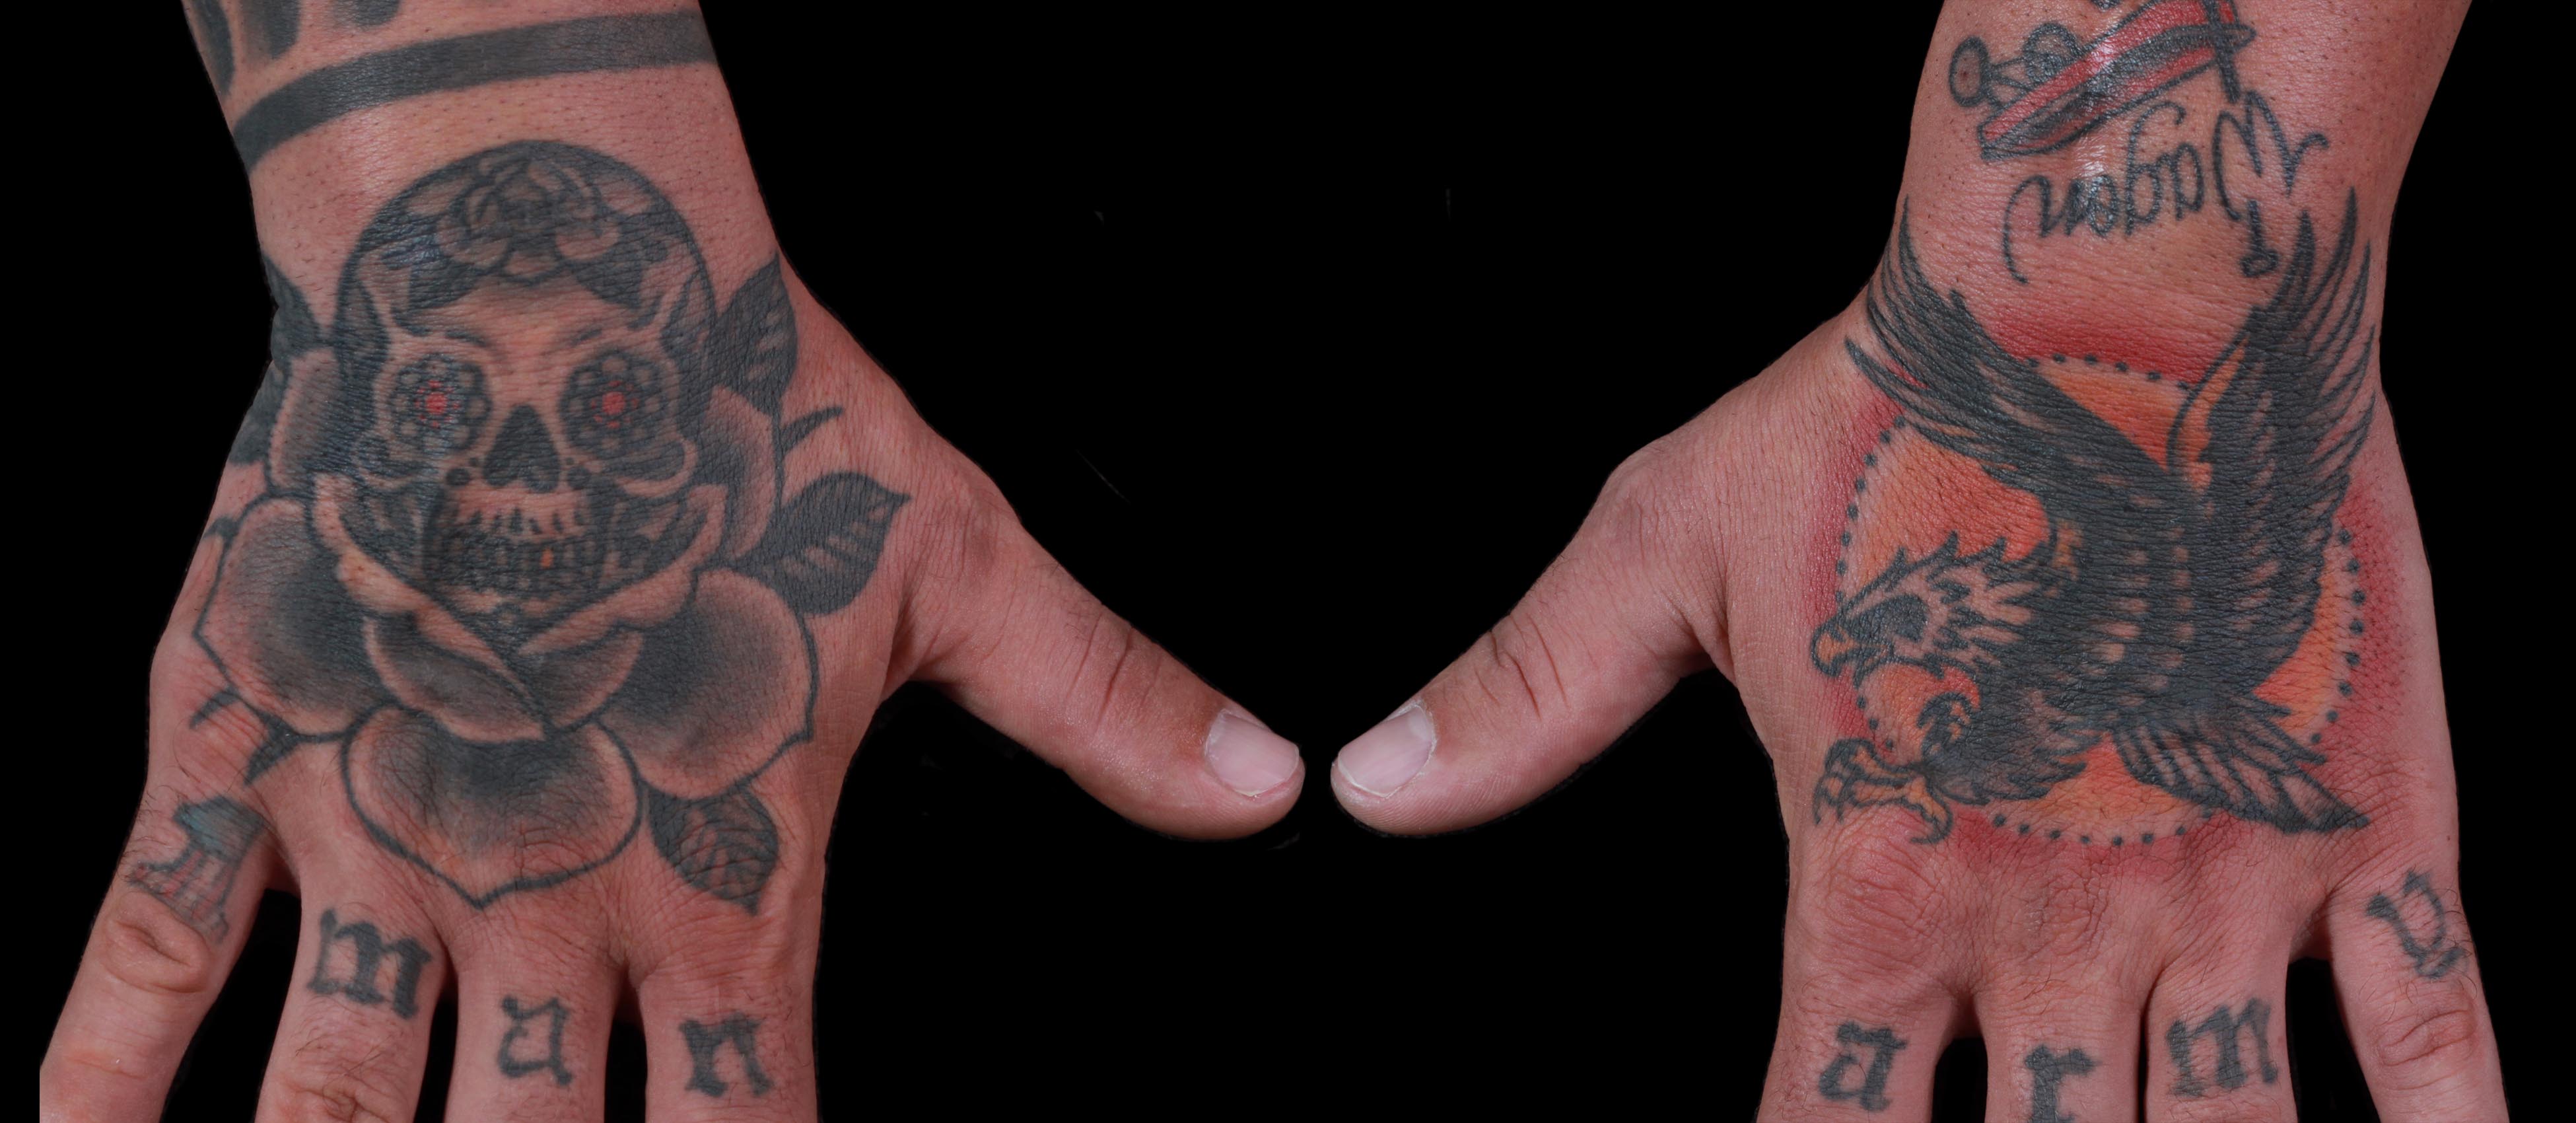 brian-thurow-dedication-tattoo-day-of-the-dead-skull-eagle-hand